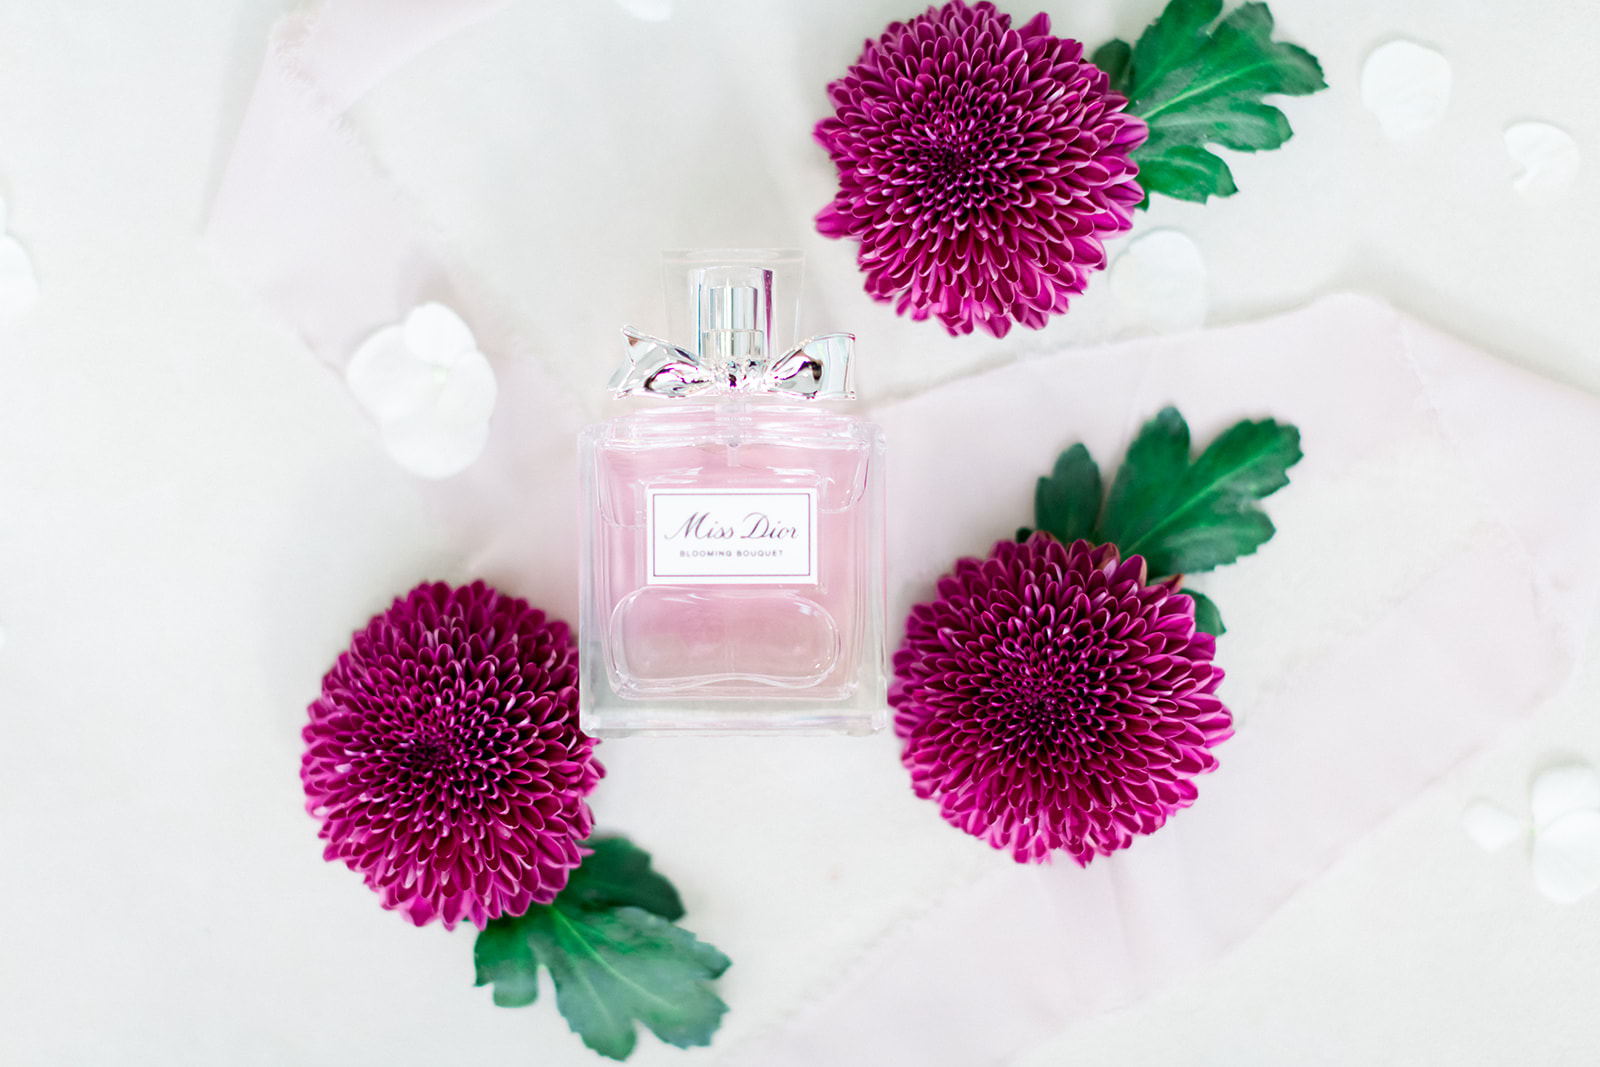 Purple Dahlia Flowers and Miss Dior Perfume Bottle | Tampa Bay Wedding Photographer Shauna and Jordon Photography